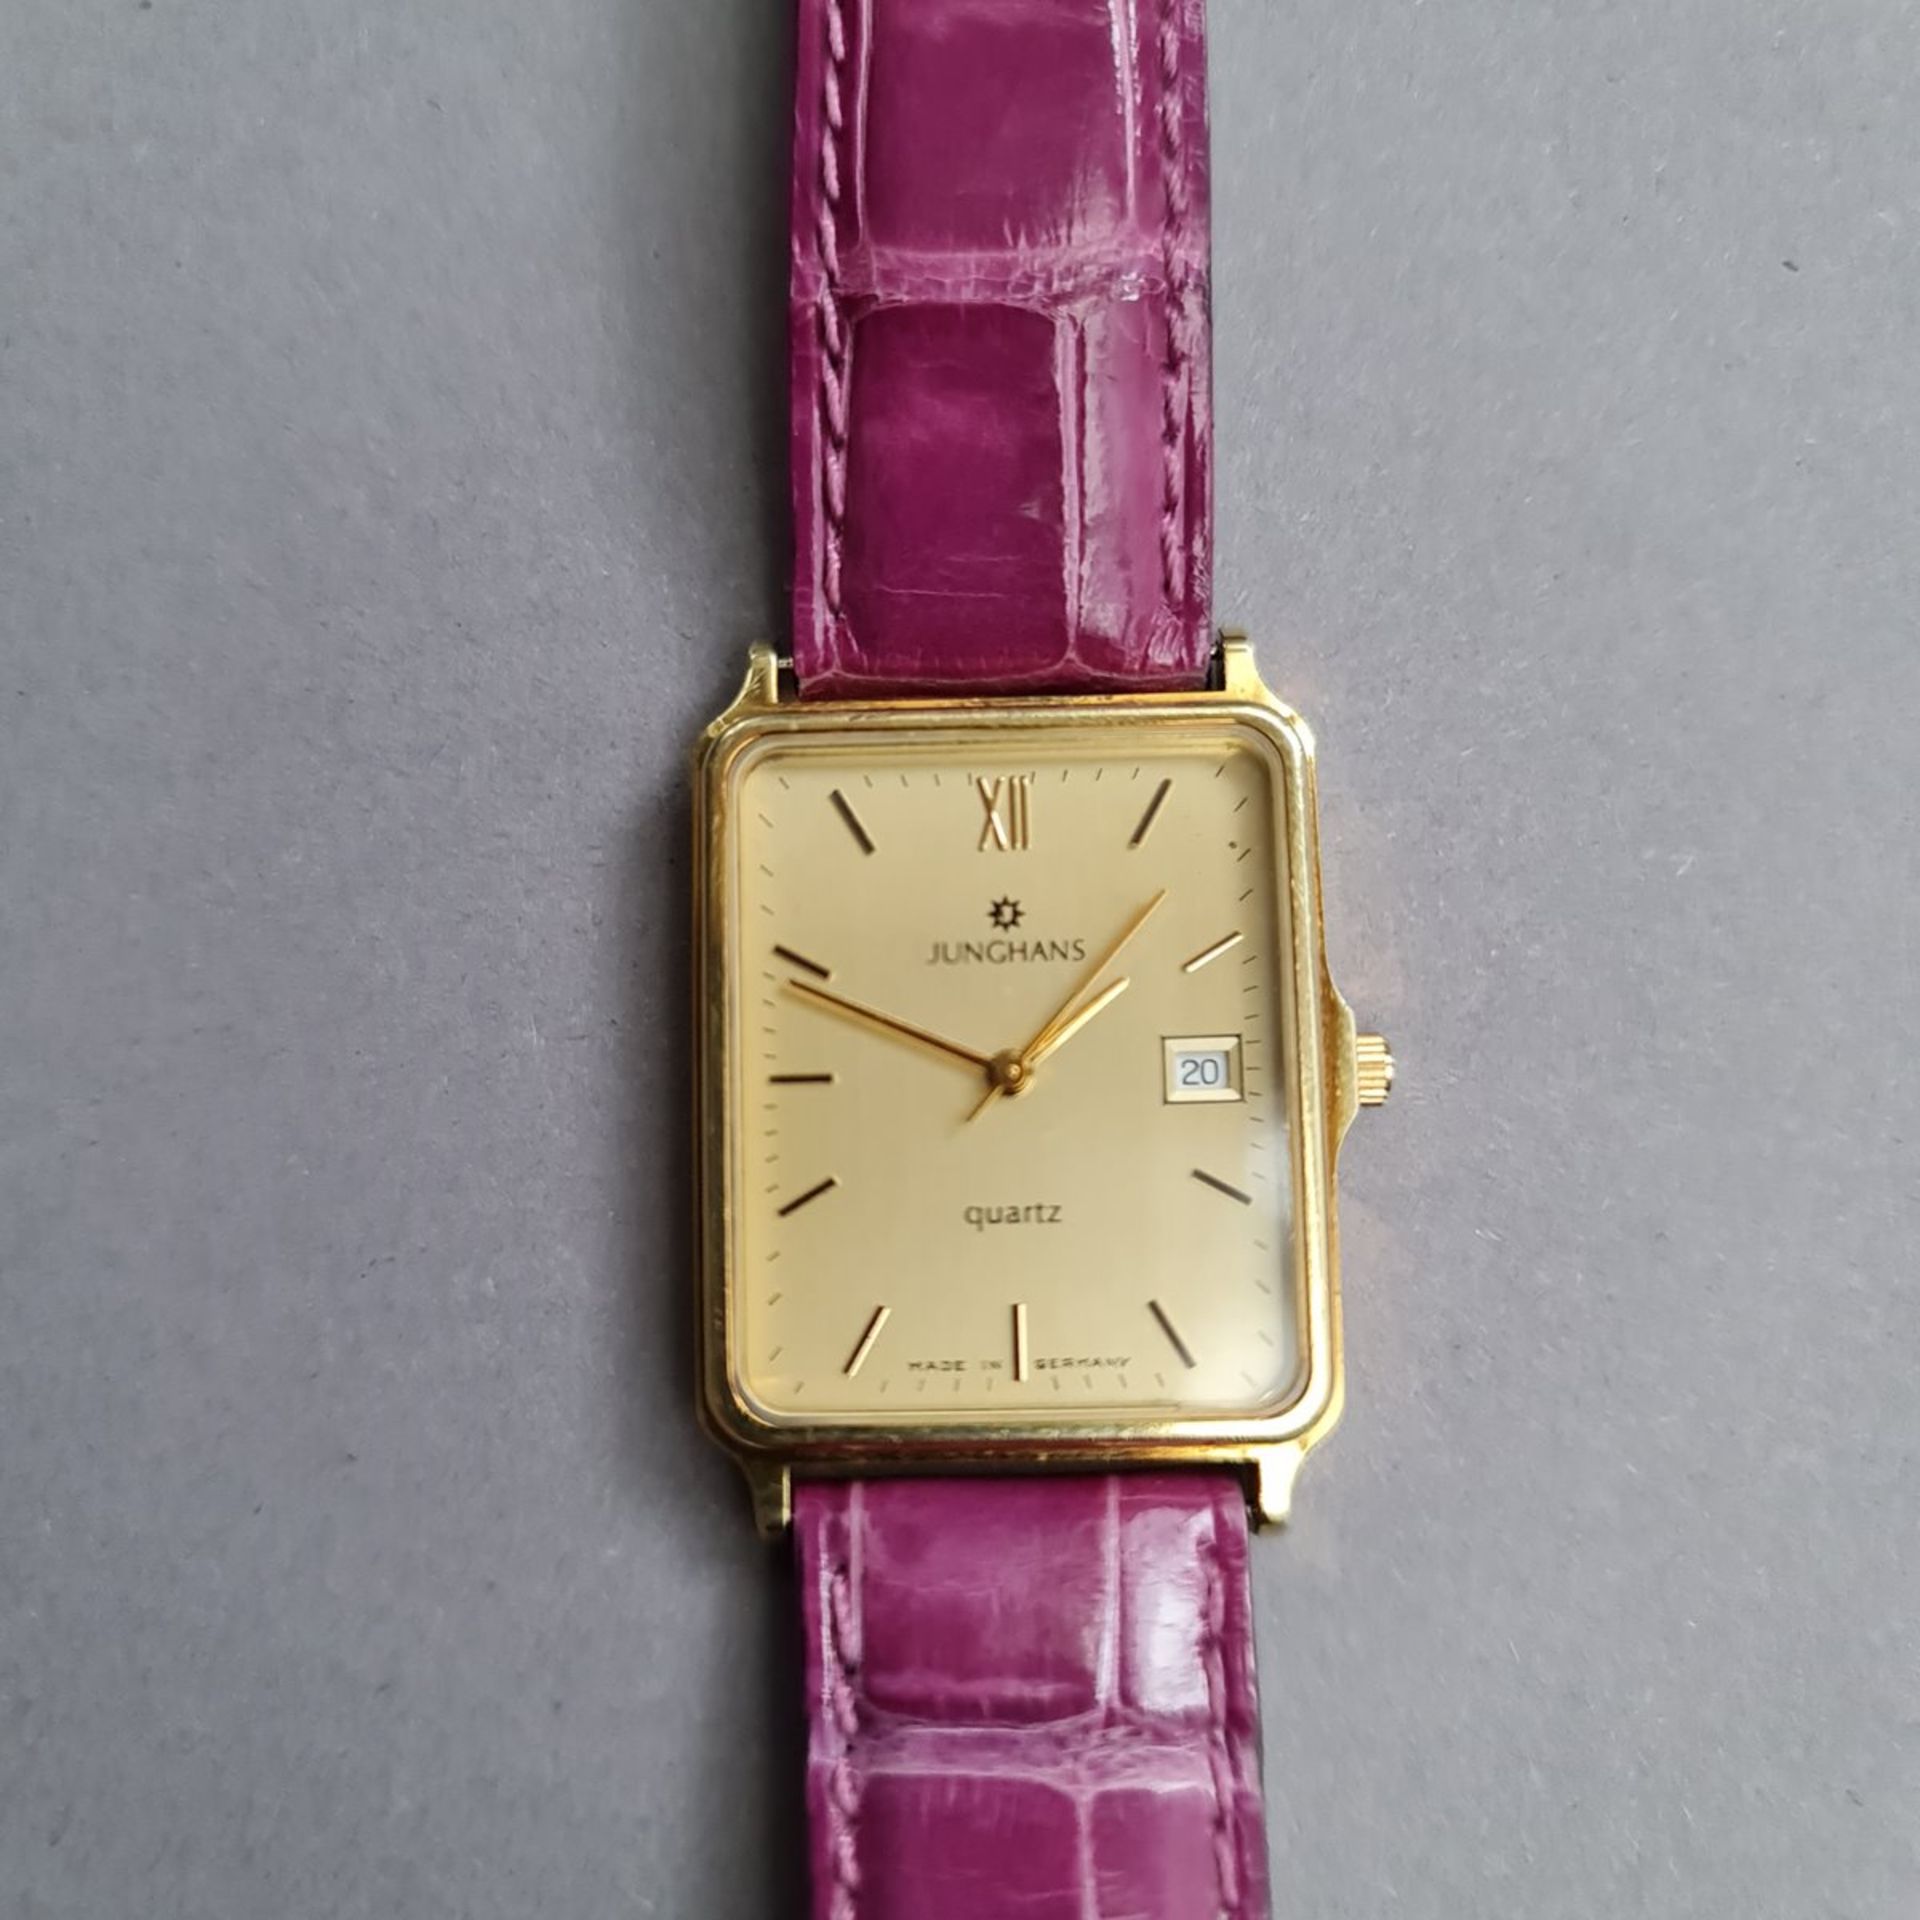 "Junghans" Armbanduhr, GG 585, Made in Germany, Quartz, sehr gute Erhaltung, Maße 3 x 2,5 cm